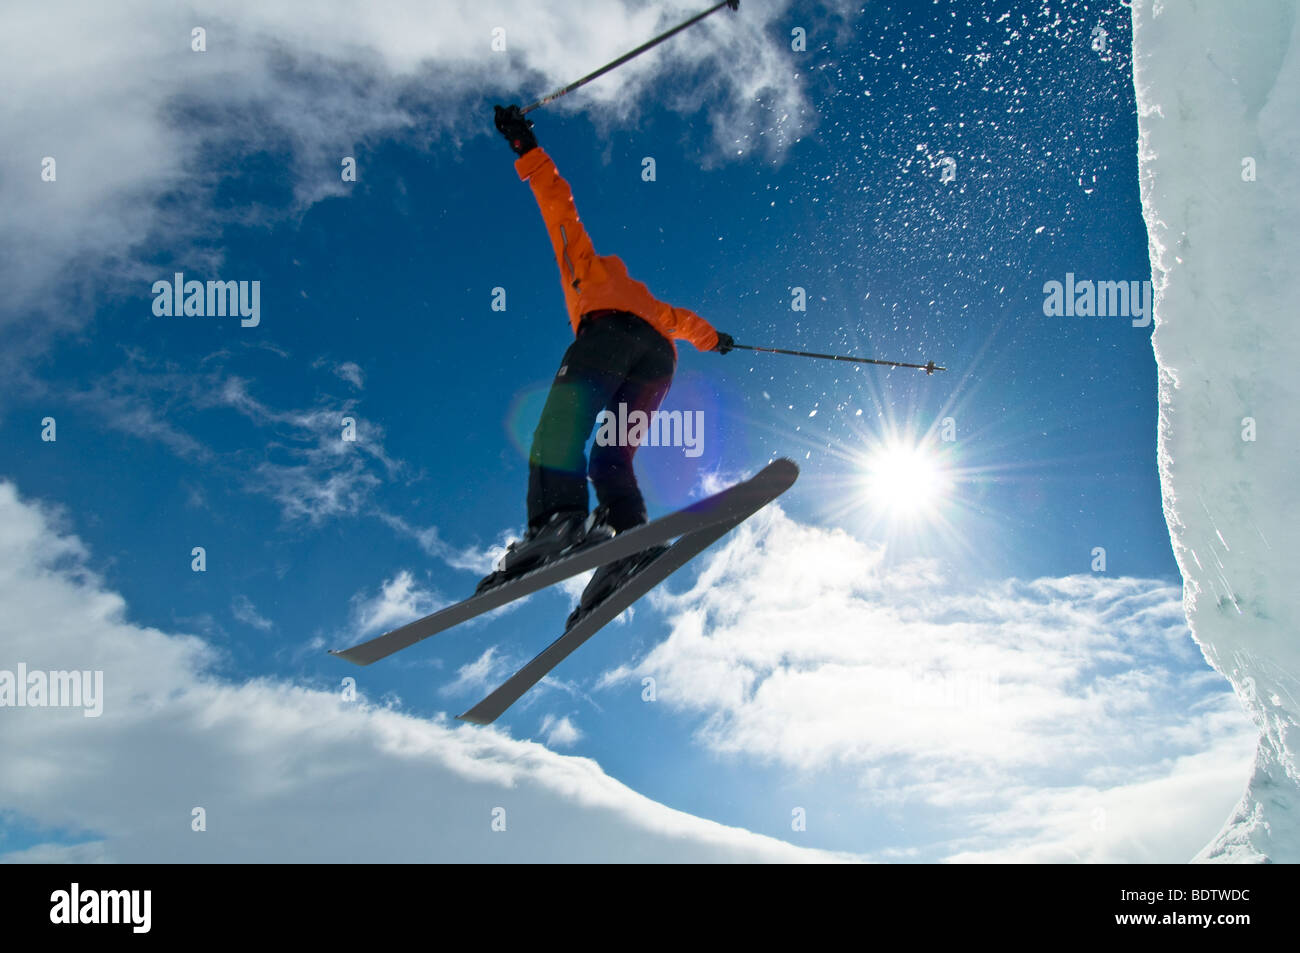 Schneepiste storulvan skifahrer auf, jaemtlands fjaell jaemtland,,, Schweden, skieur sur une piste de ski, Suède Banque D'Images